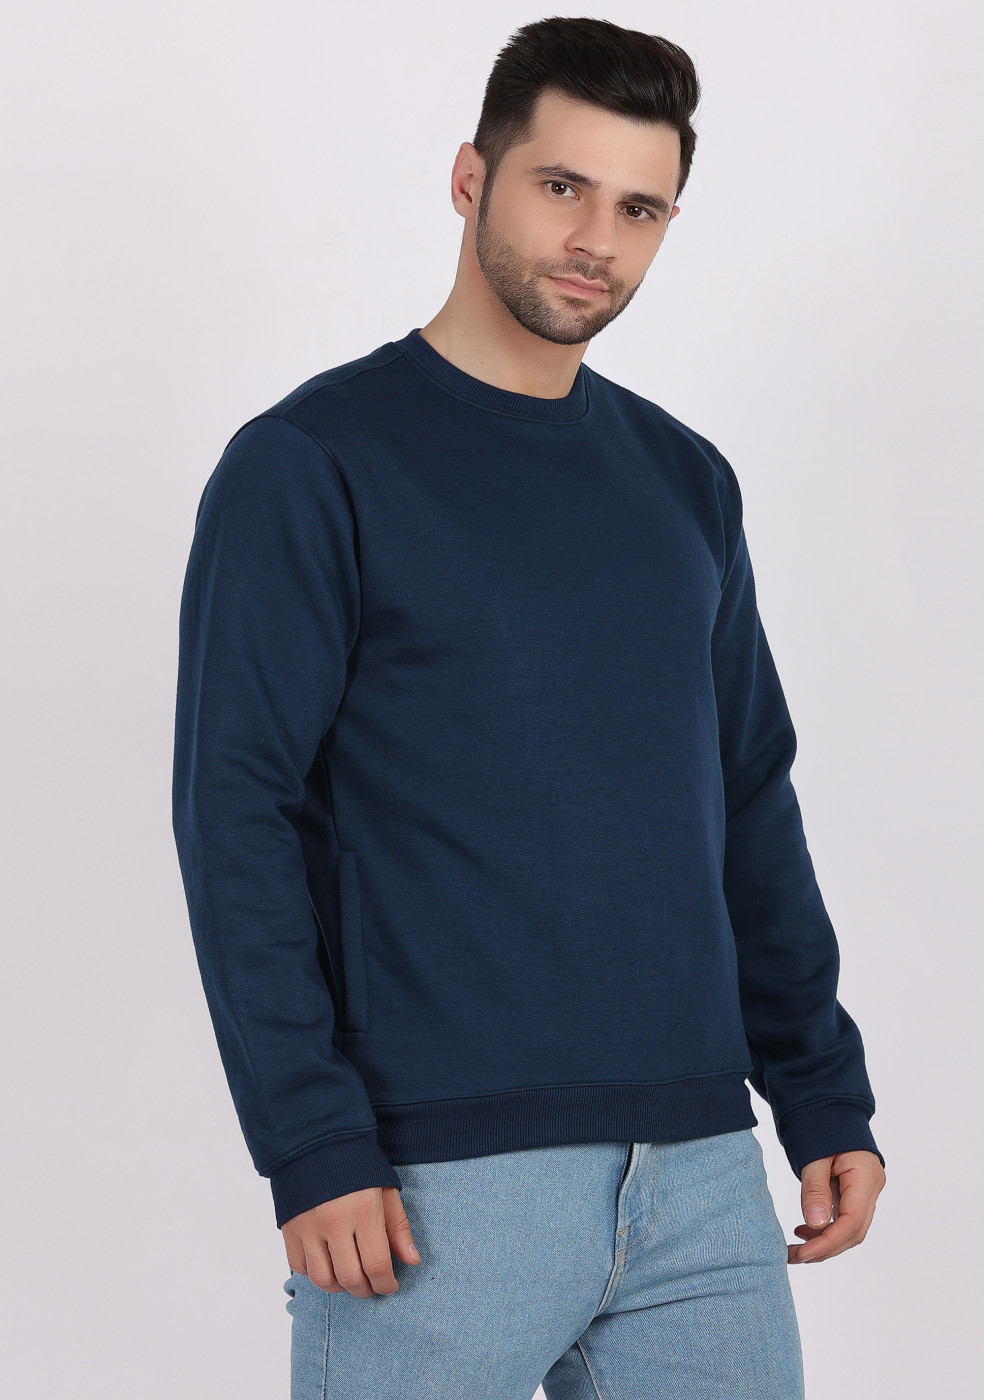 HUKH Airforce Color Sweatshirt For Men